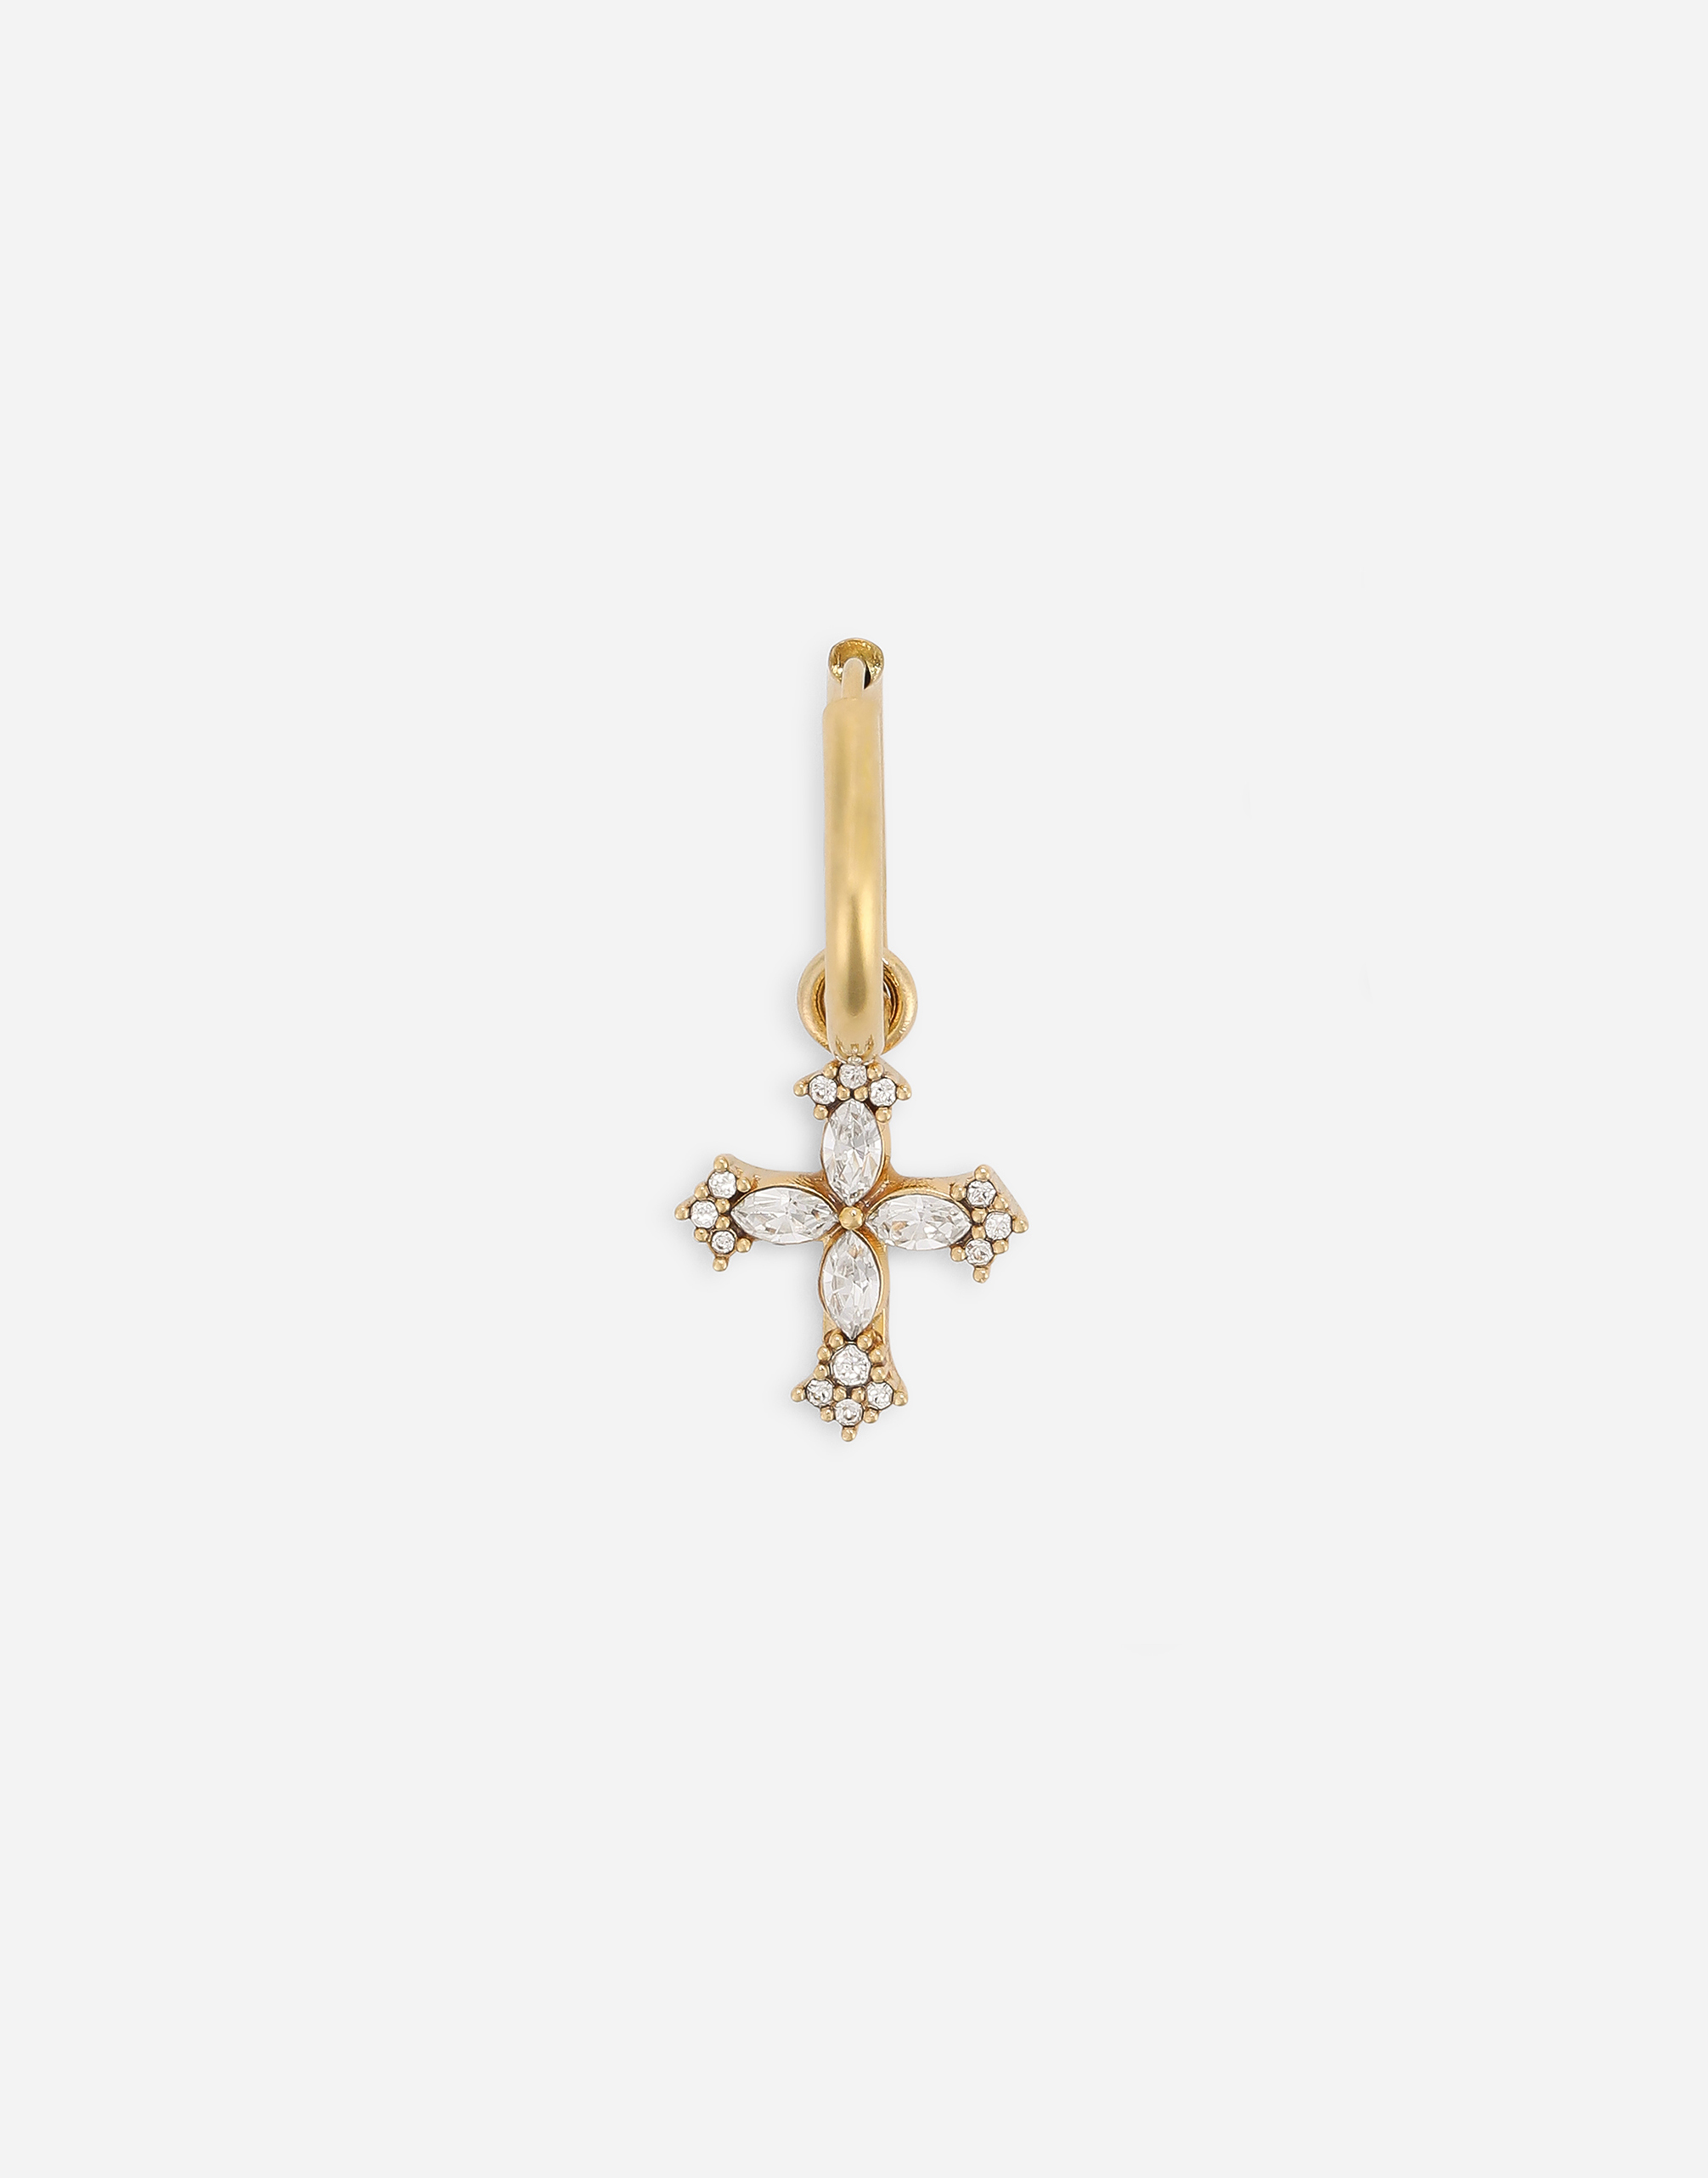 Single earring with cross in Gold